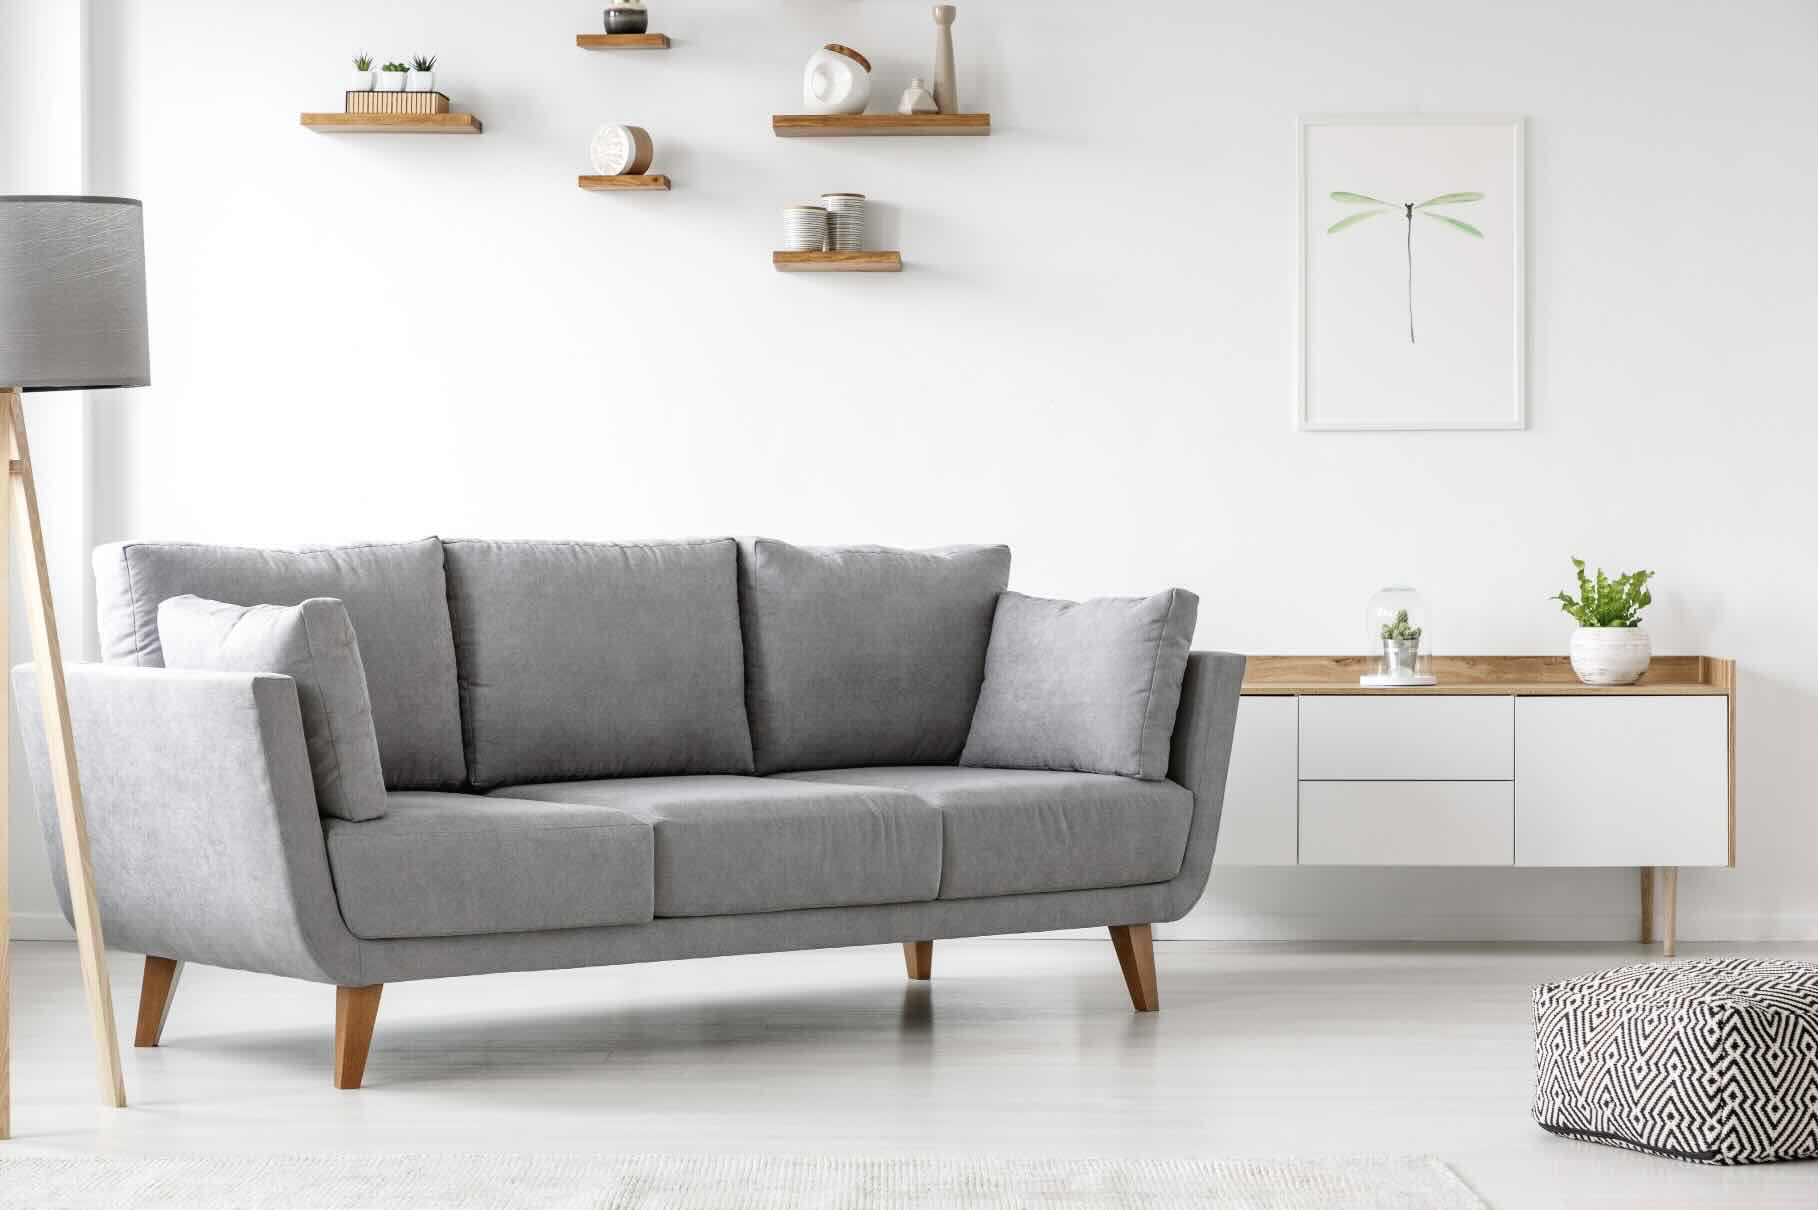 What Is Scandi Furniture? Scandi Design Furniture Explored | Mondoro